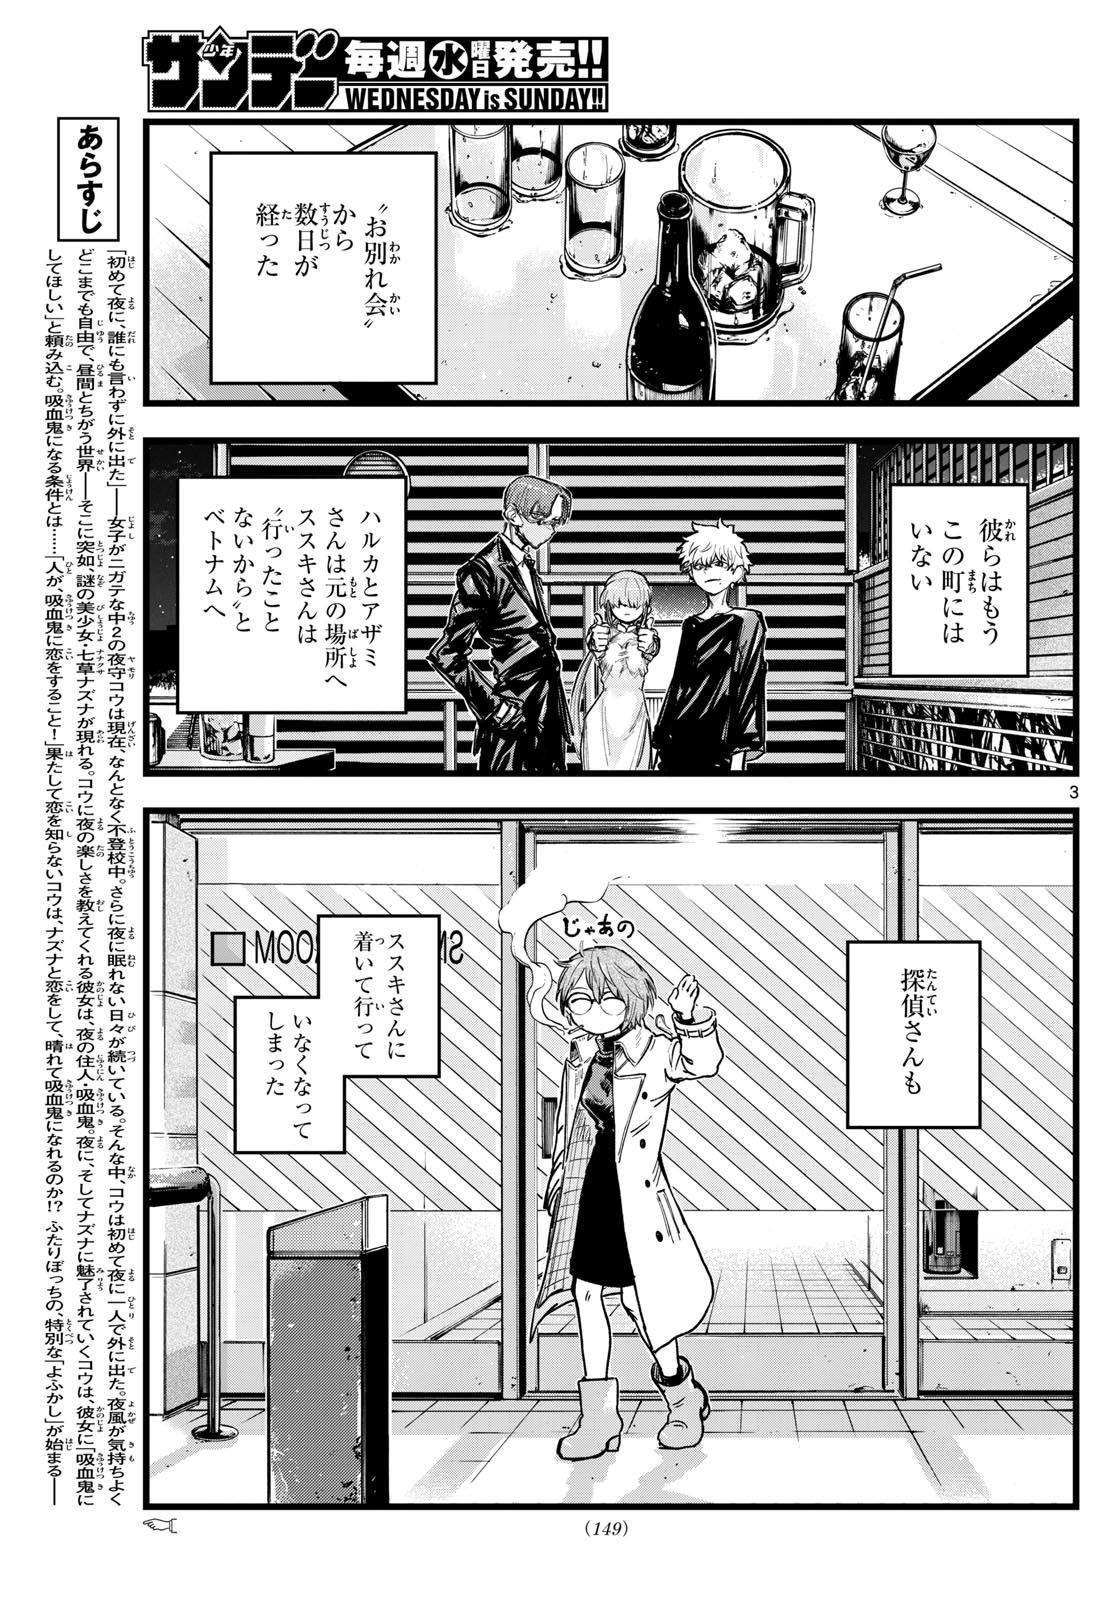 Yofukashi no Uta - Chapter 194 - Page 3